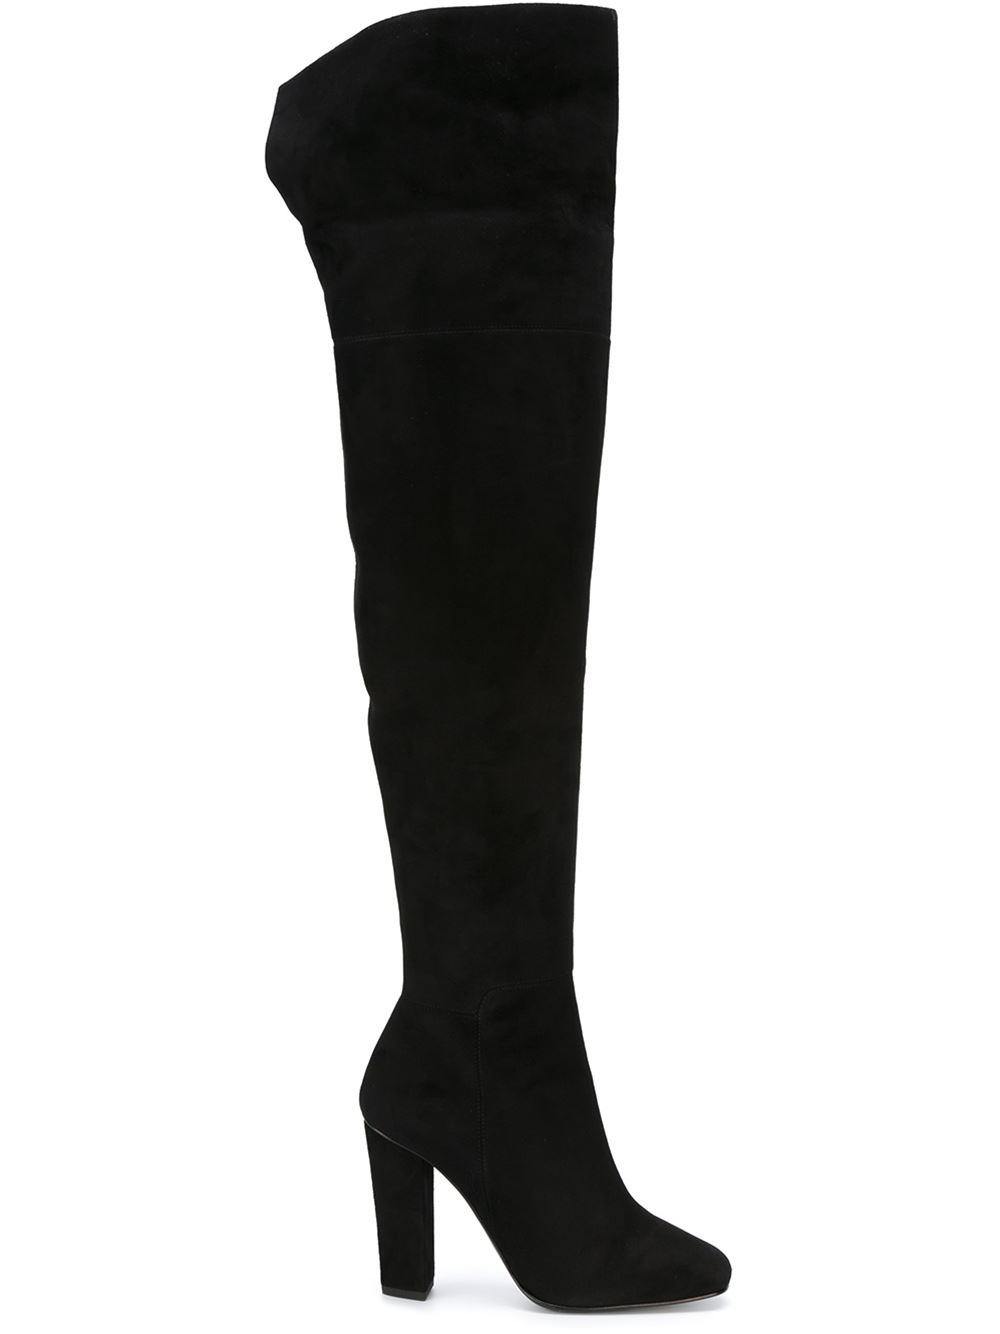 Lyst - Giuseppe Zanotti Over-the-knee Length Boots in Black